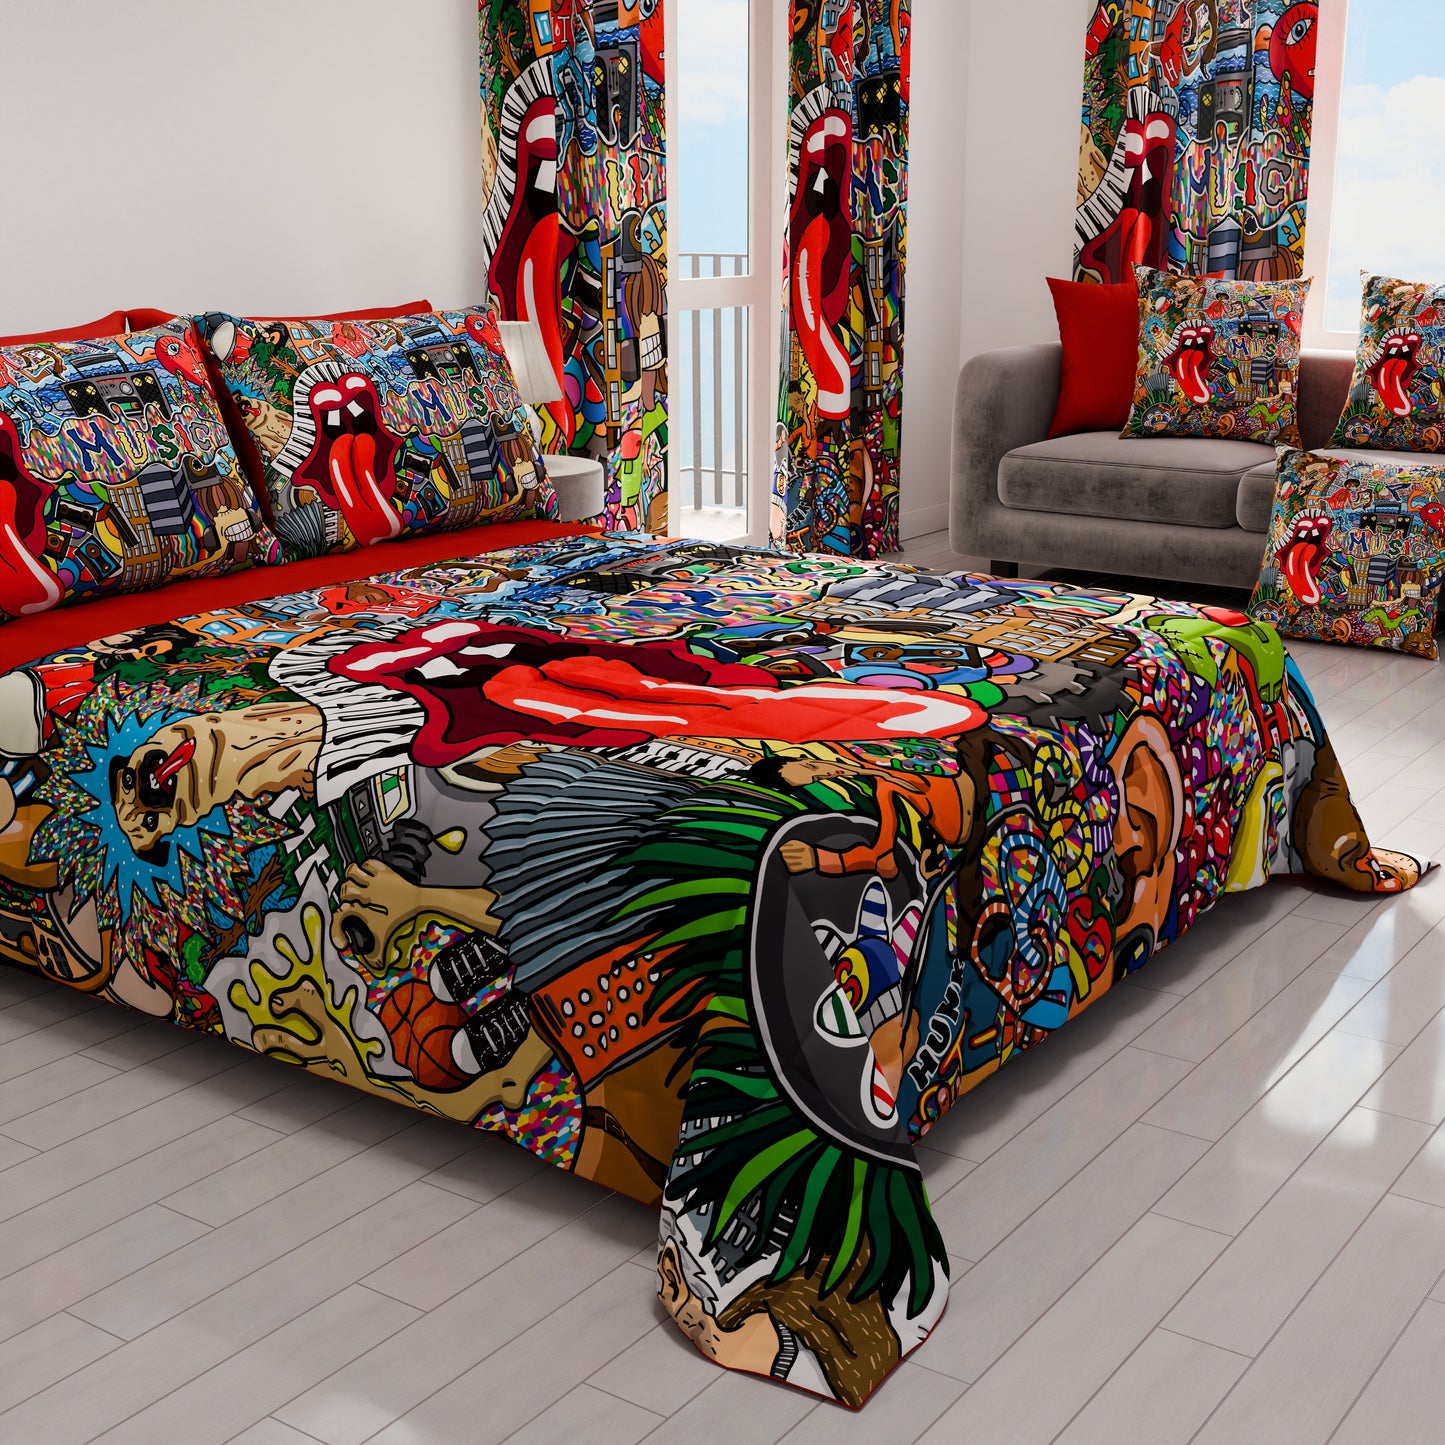 Spring Autumn Bedspread Quilt in Murals Digital Print 